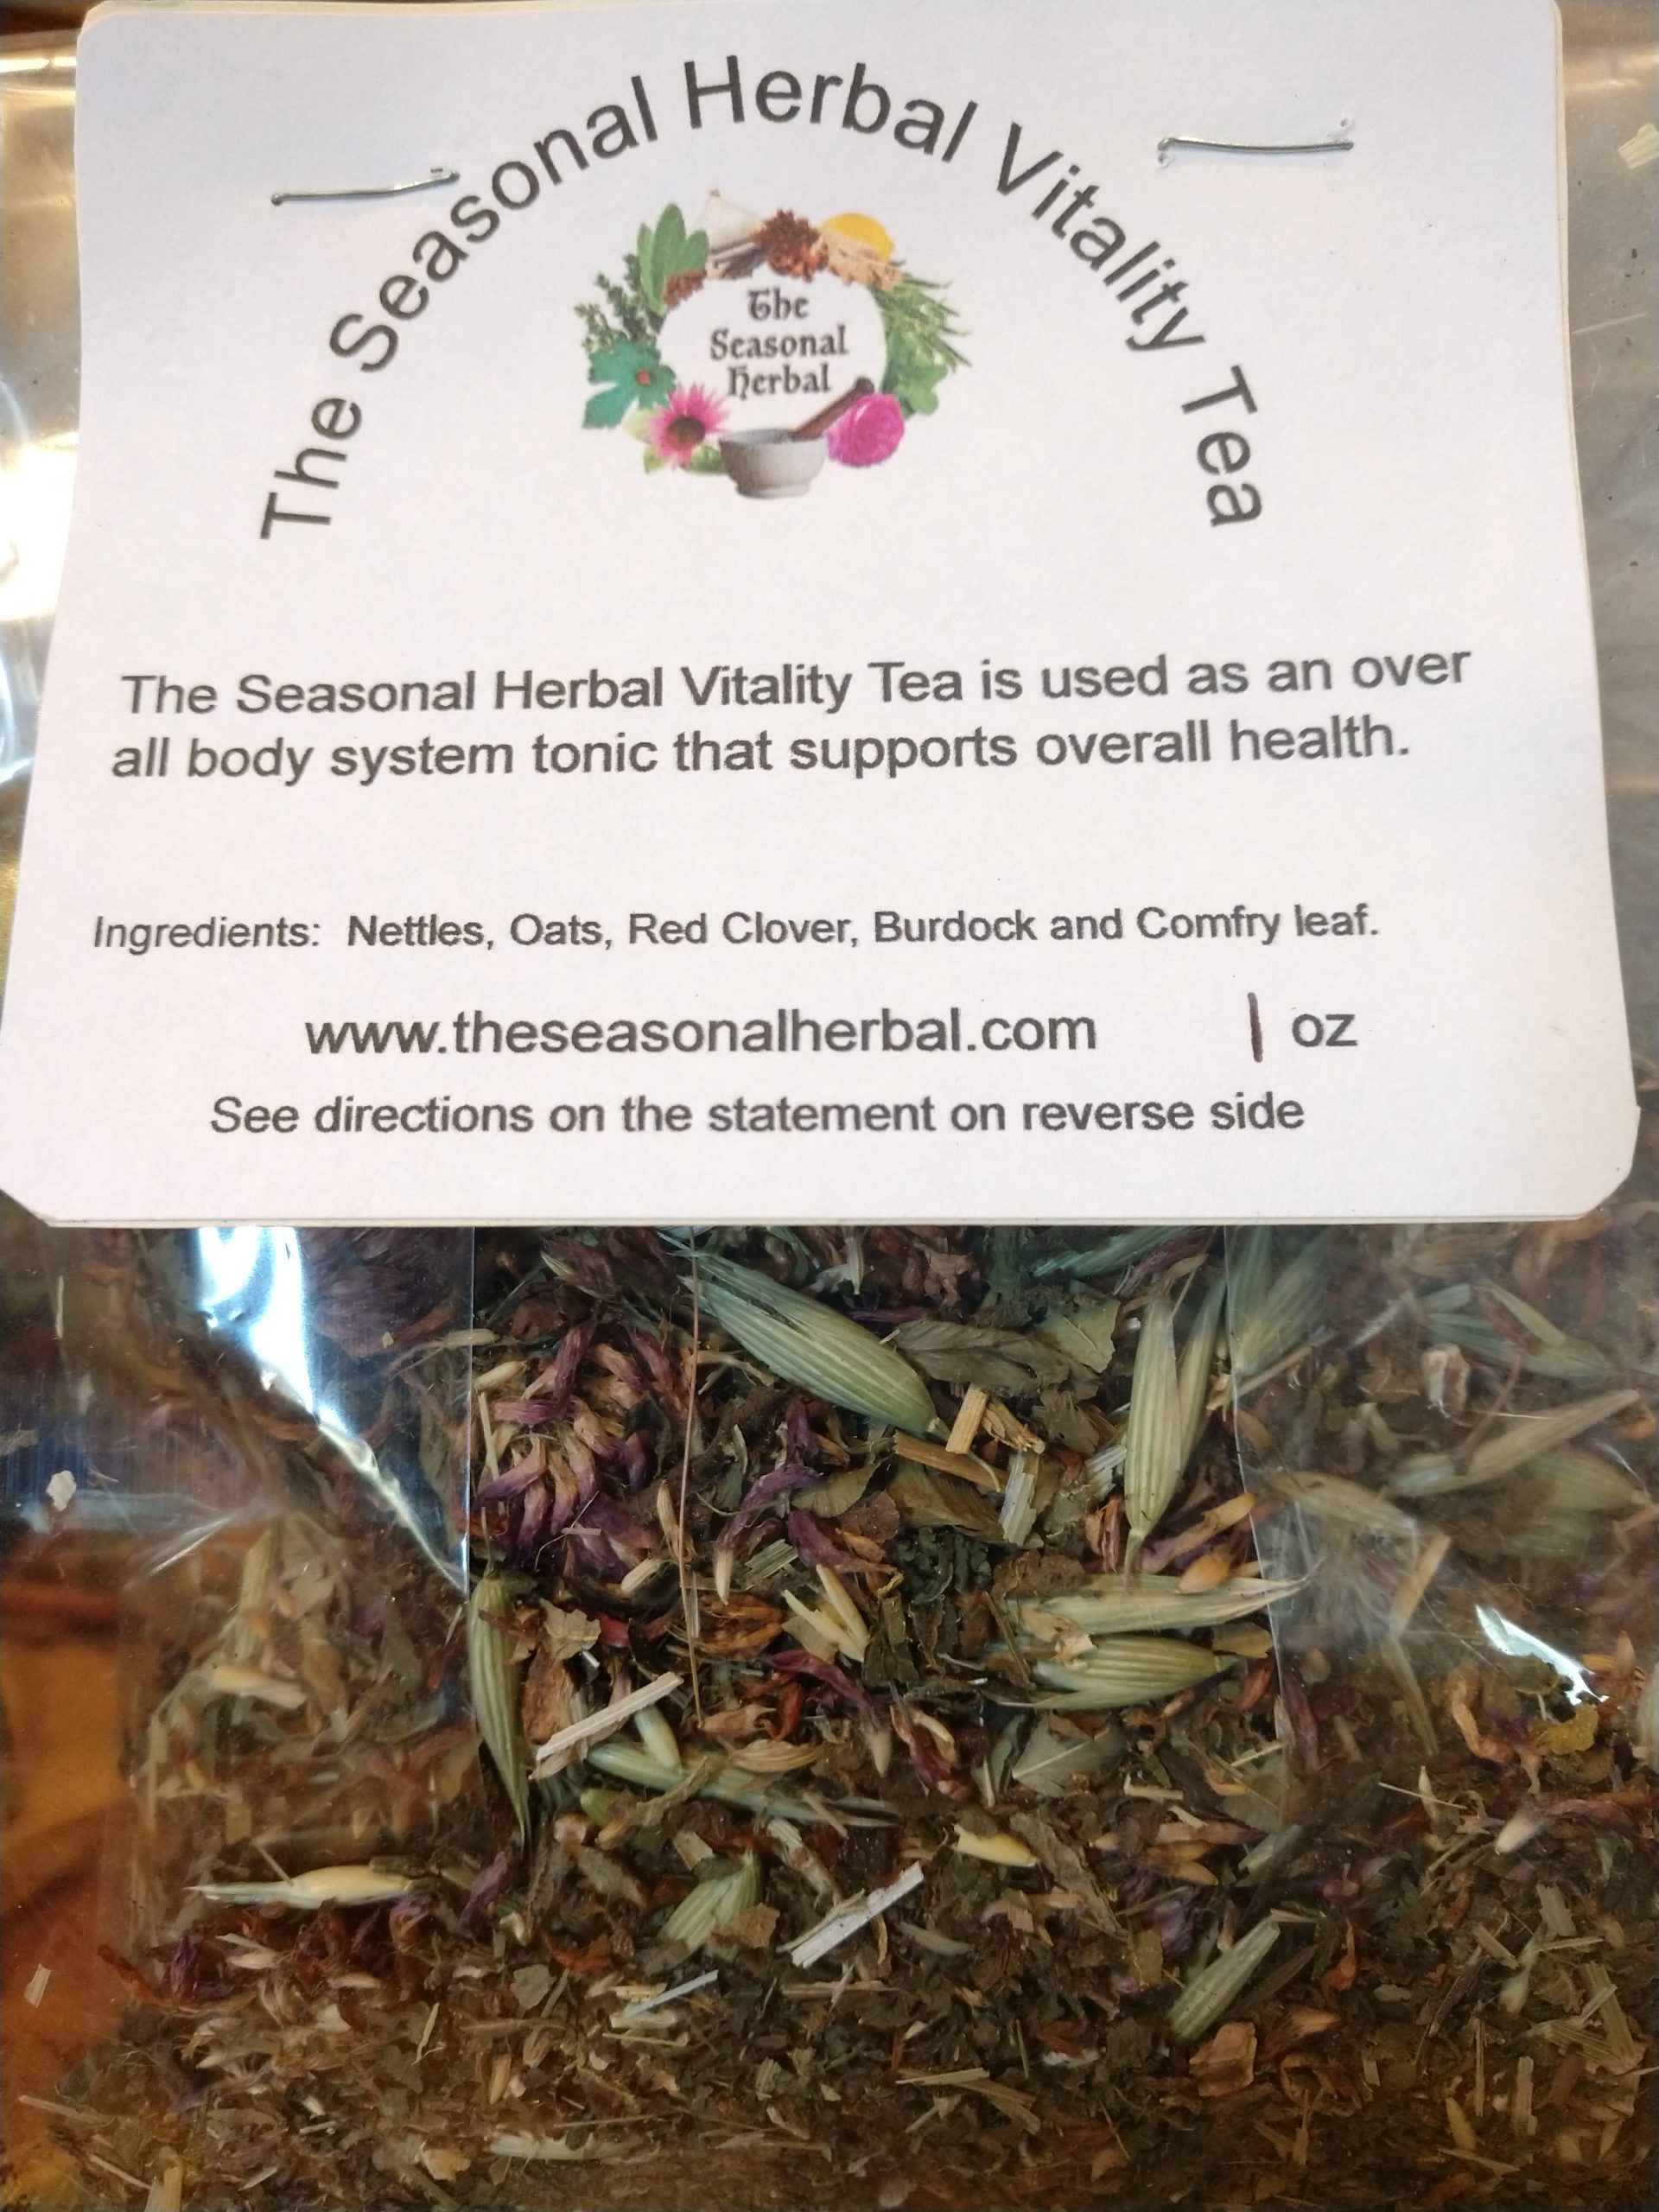 The Seasonal Herbal Vitality Tea